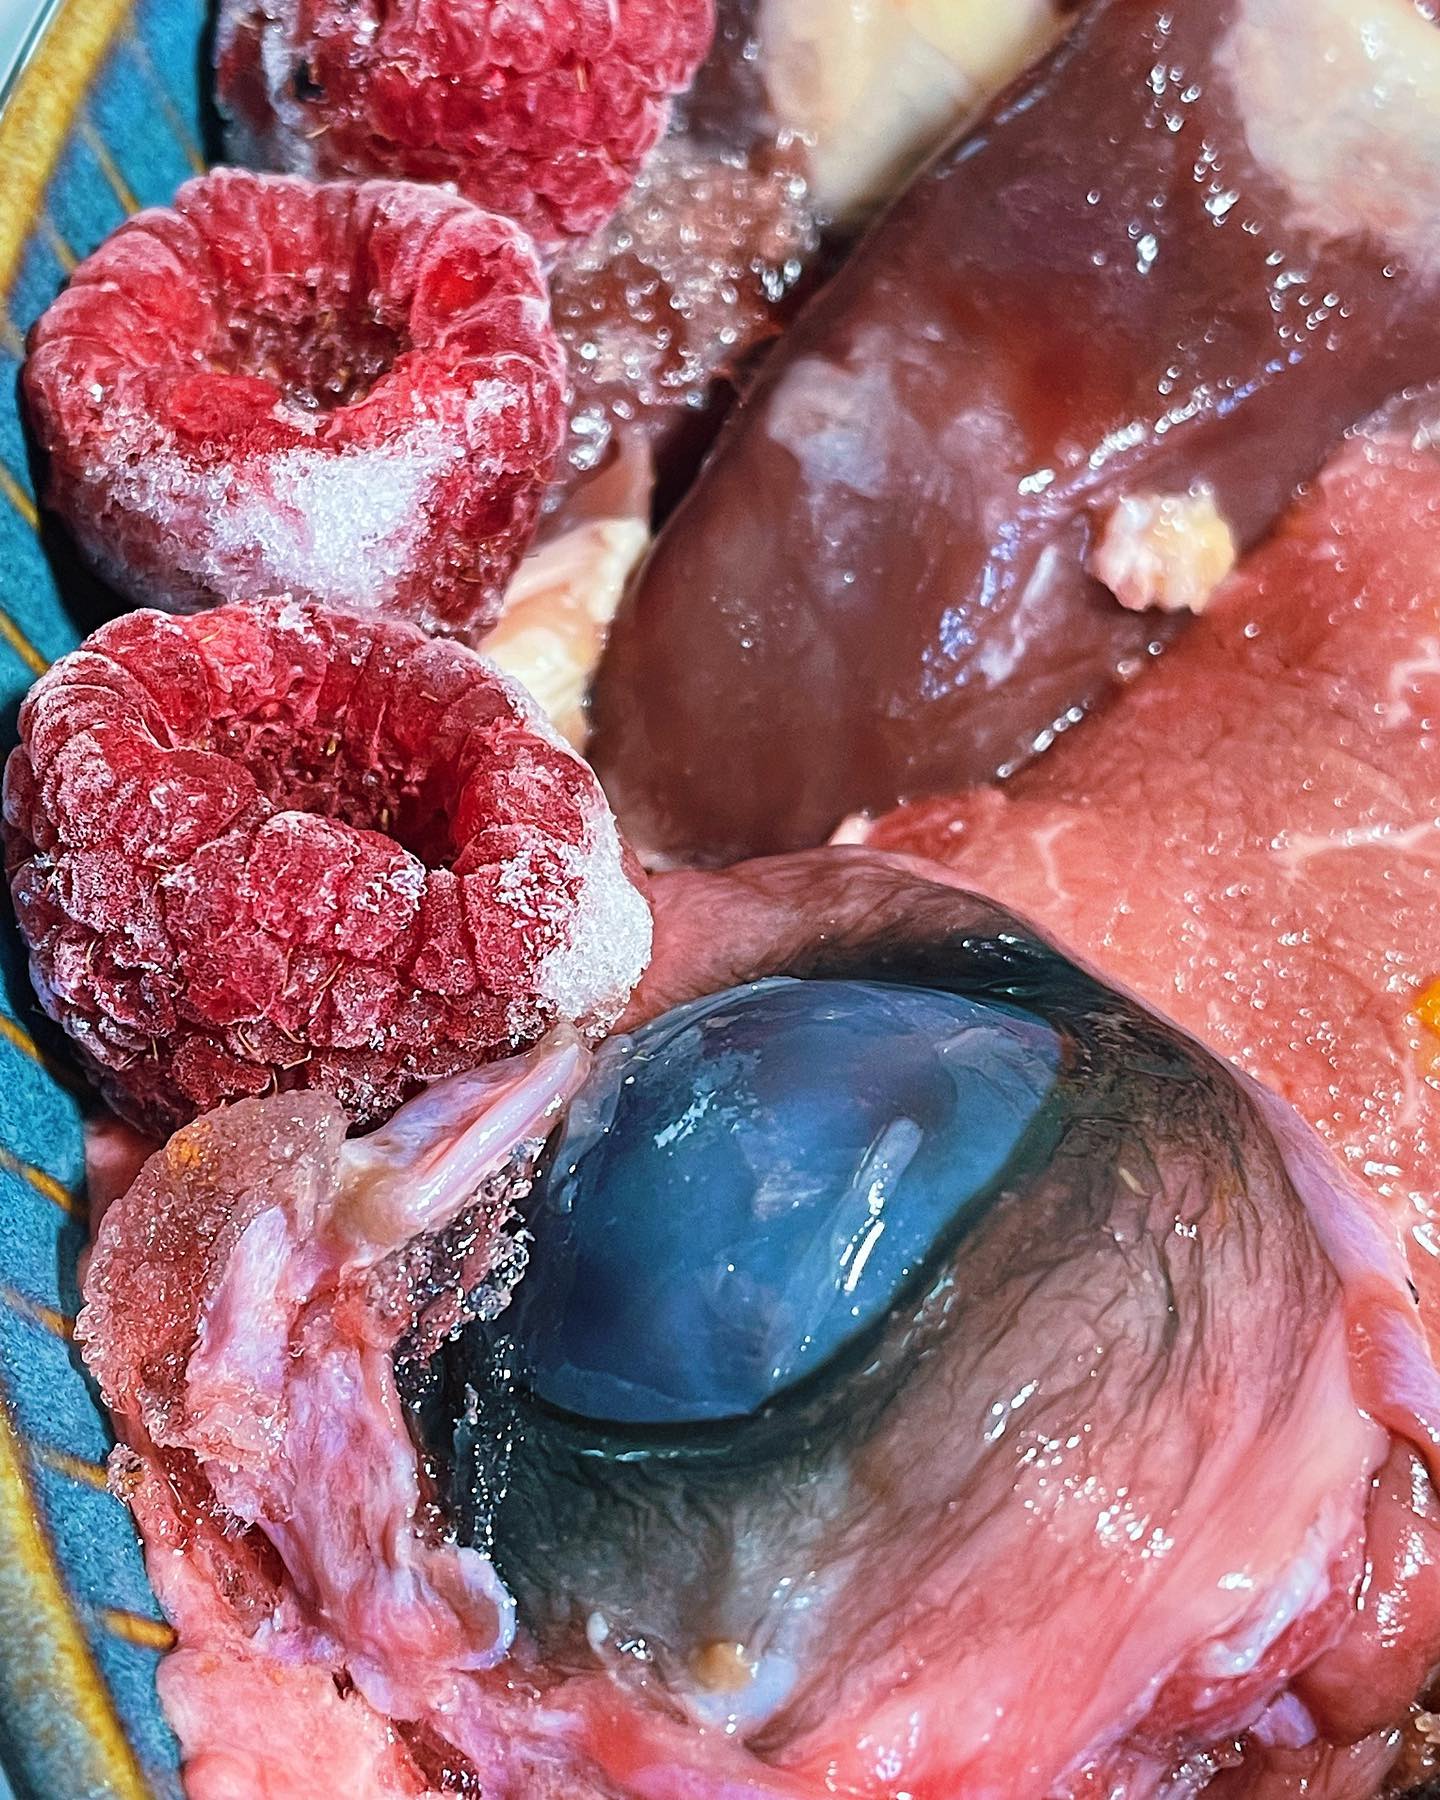 closeup photo of raspberries and beef eyeball